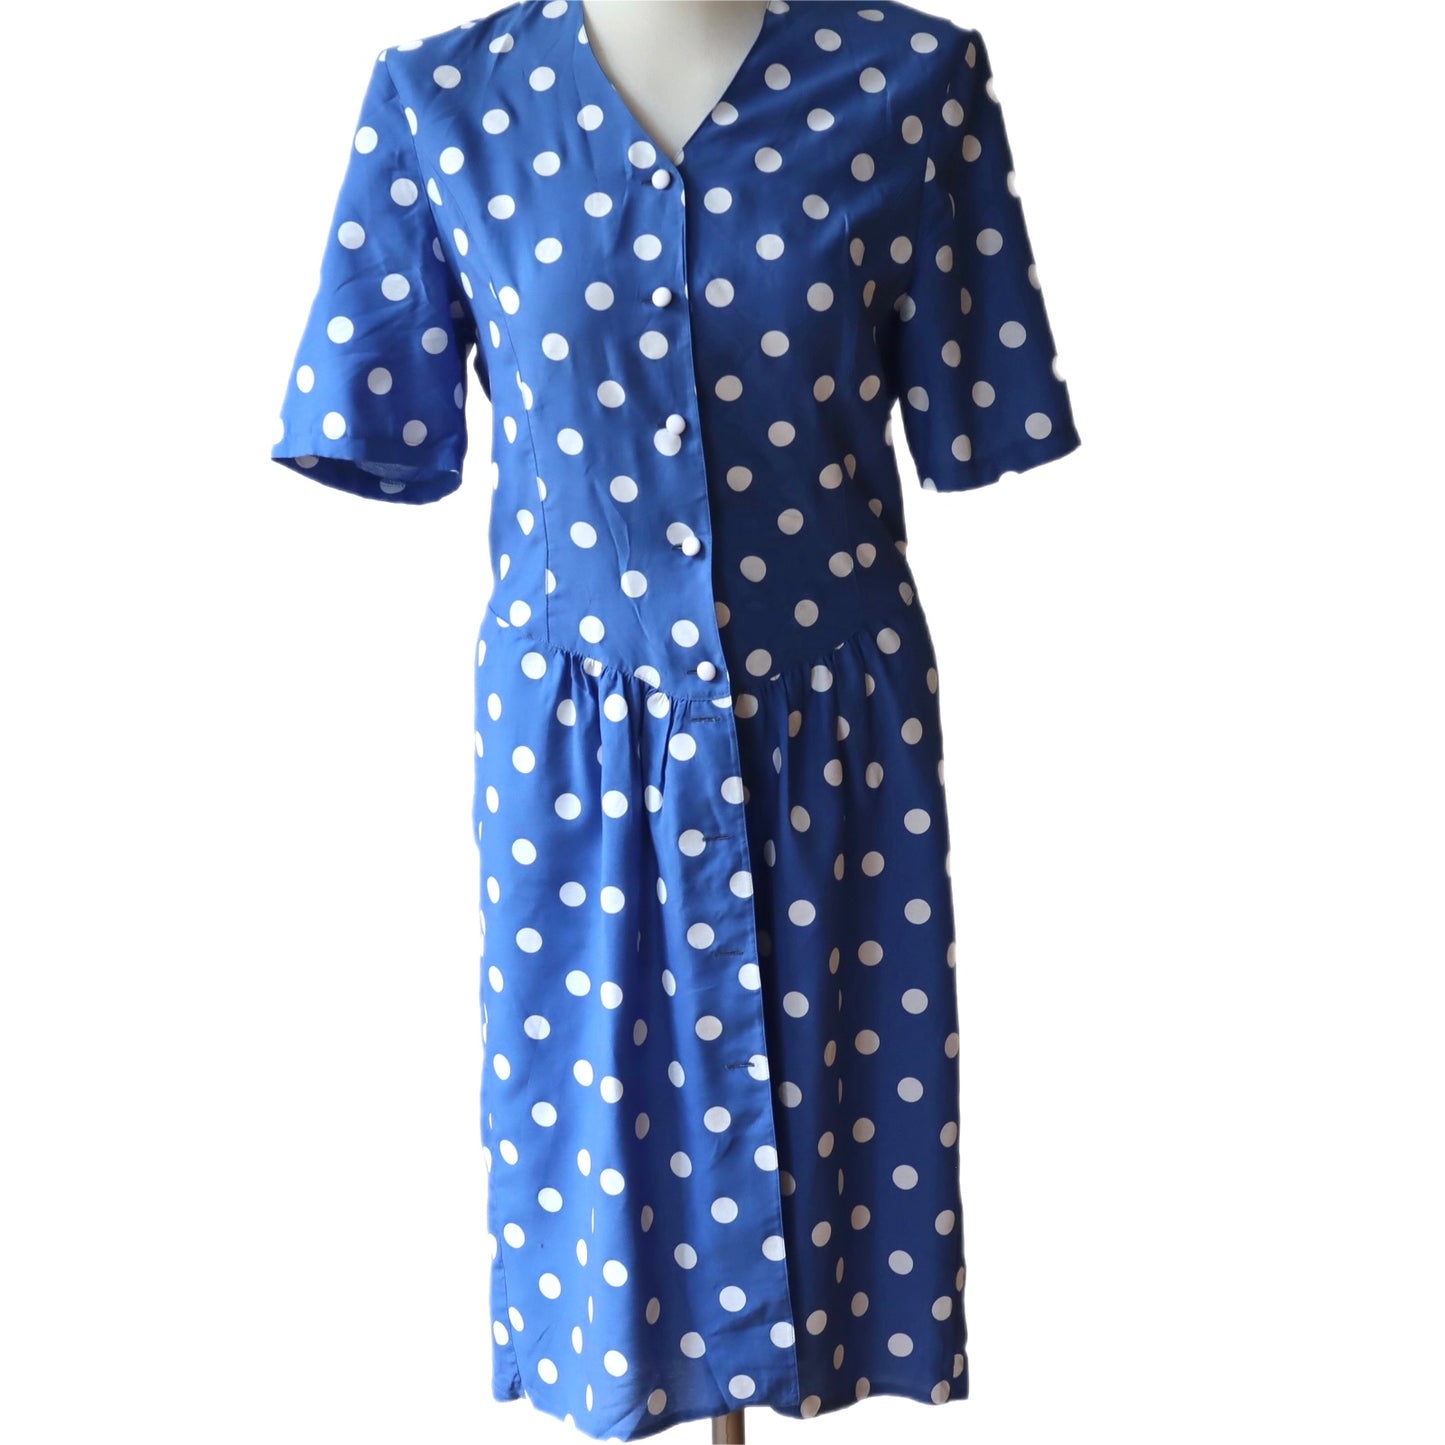 Kjole, blå med hvite prikker, secondhand